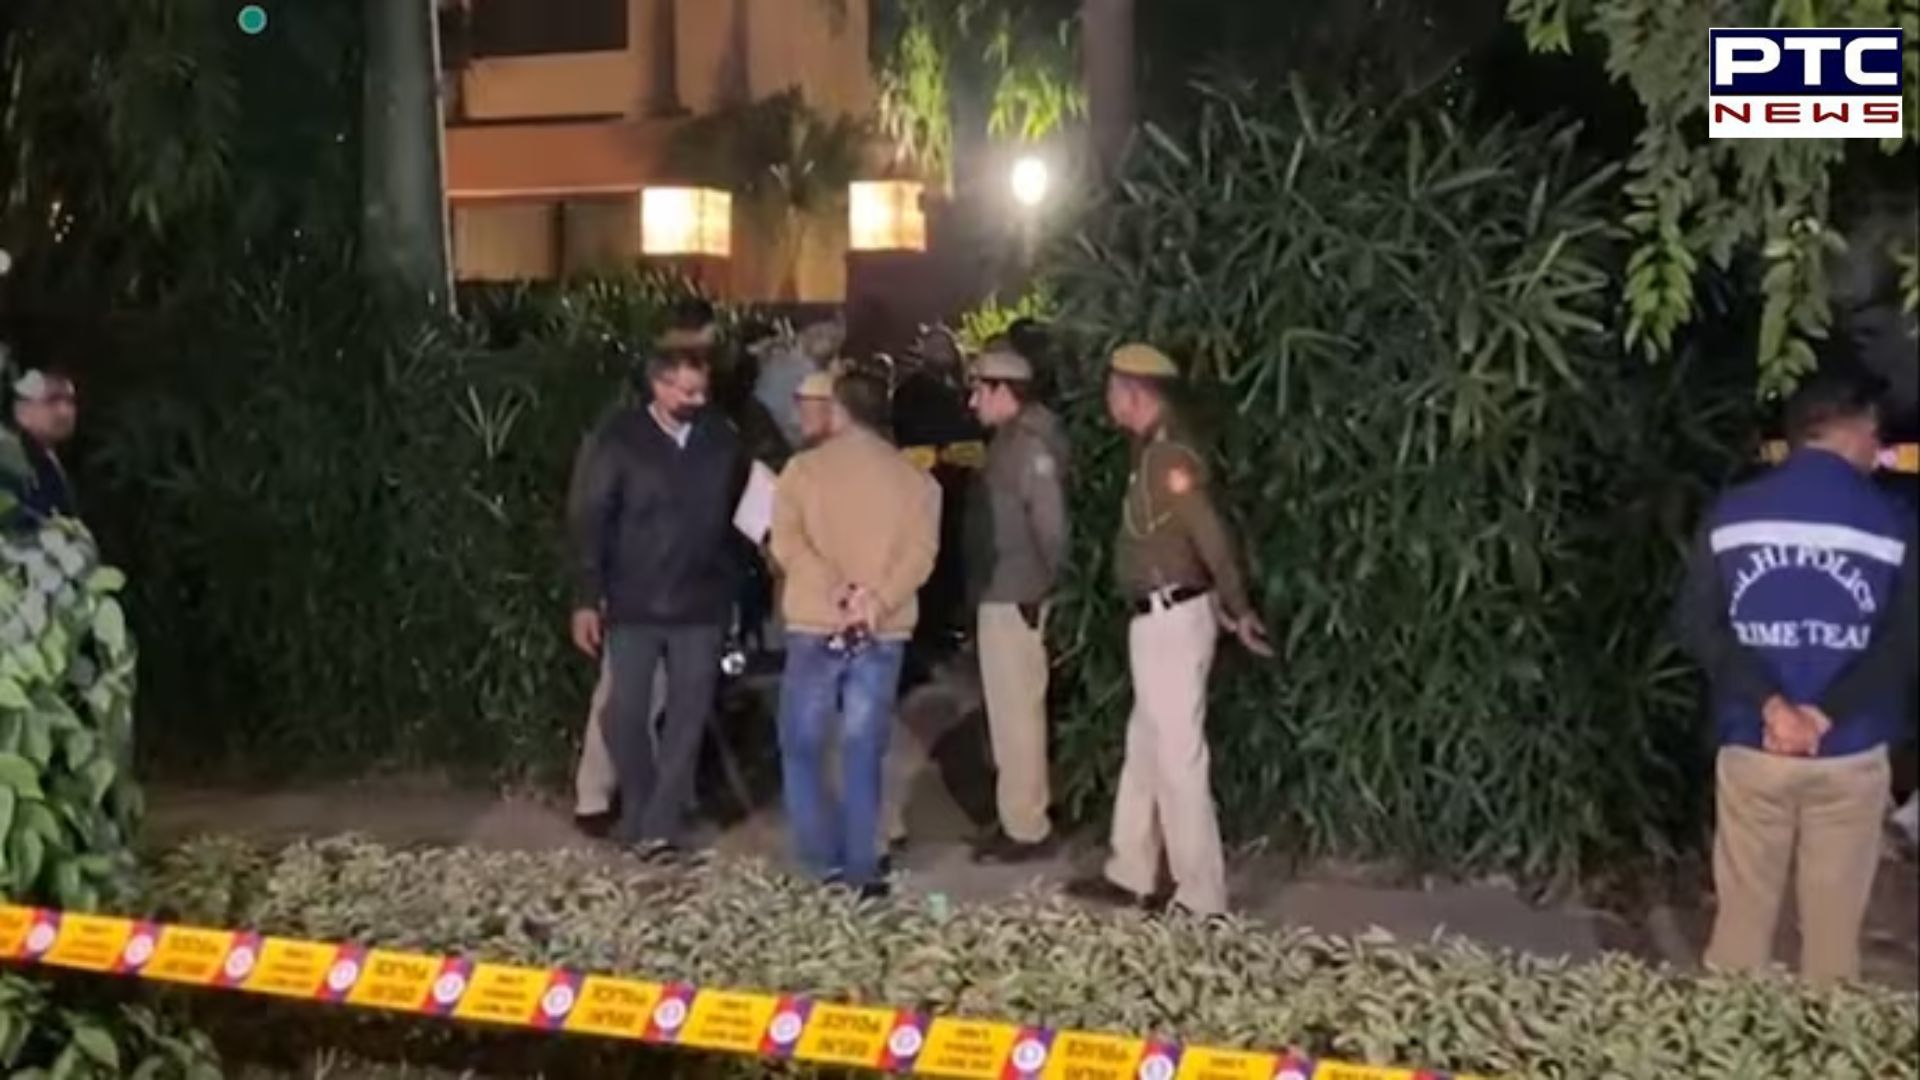 Delhi Police get call of blast near Israel Embassy in Chanakyapuri area, watch visuals